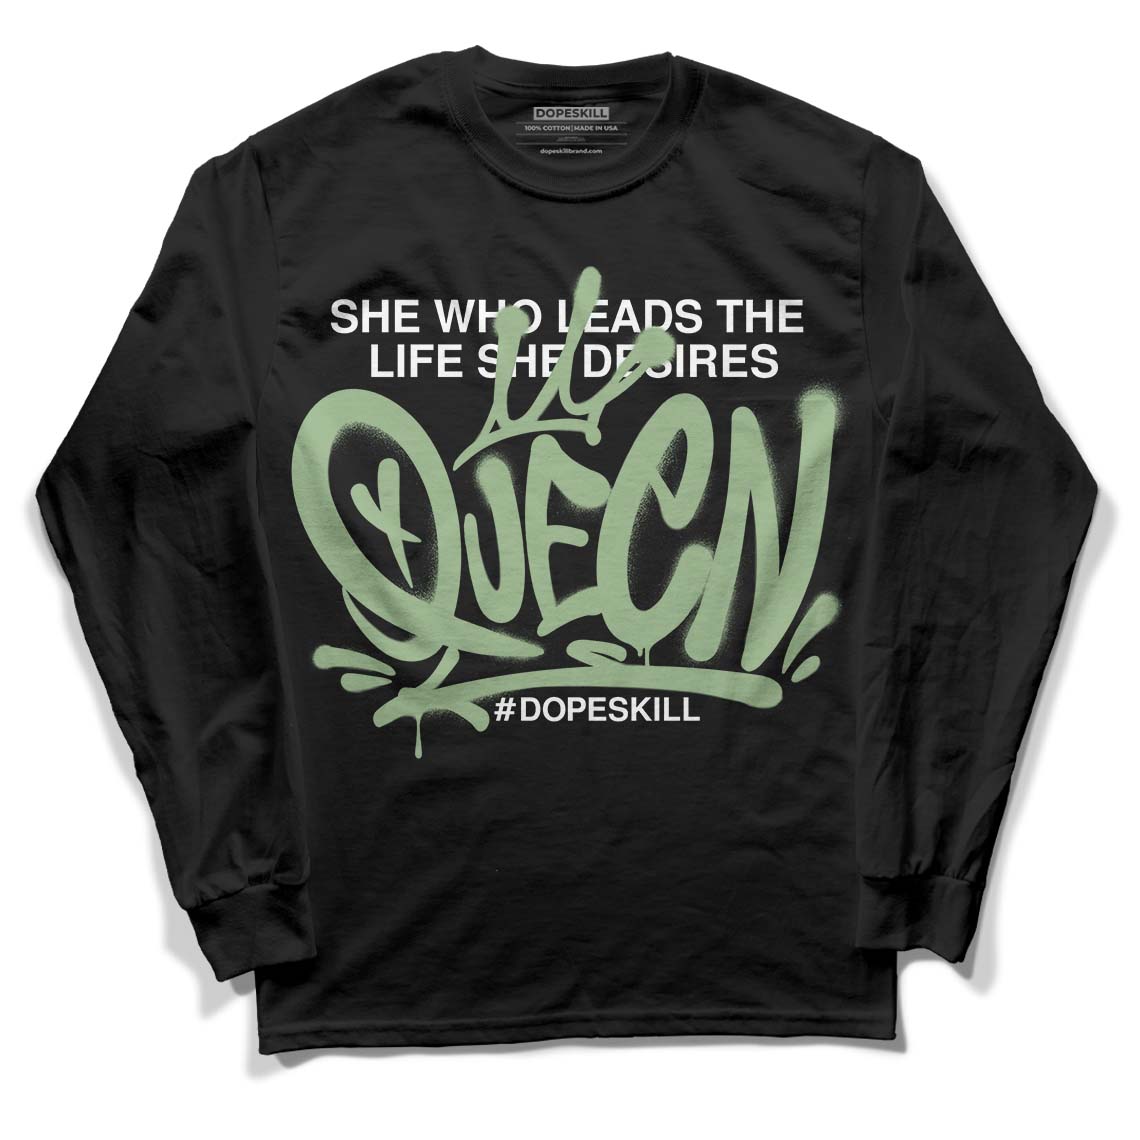 Jordan 4 Retro “Seafoam” DopeSkill Long Sleeve T-Shirt Queen Graphic Streetwear - Black 